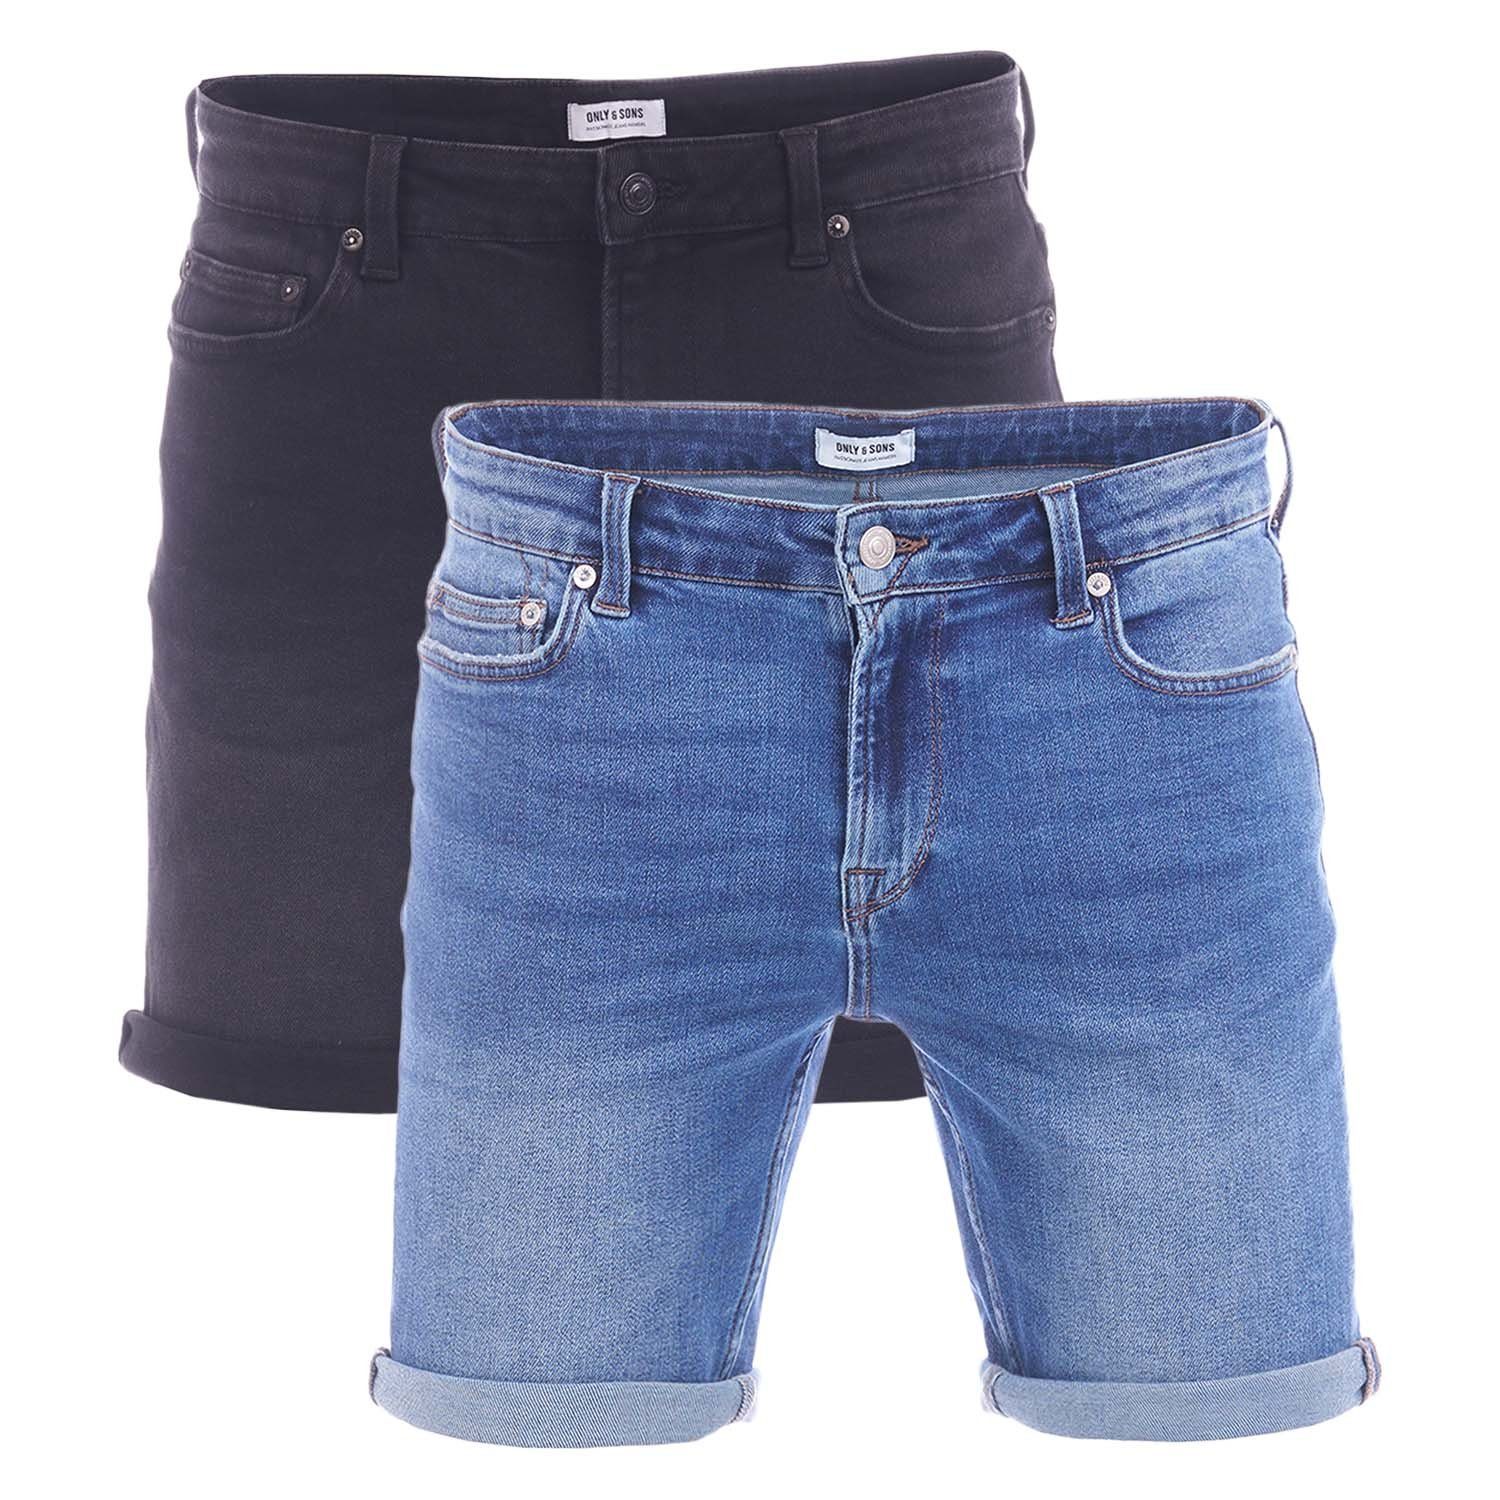 ONLY & SONS Jeansshorts Herren Shorts ONSPLY 2er Pack Regular Fit Bermudashorts mit Stretch Medium Blue / Black (22029141)